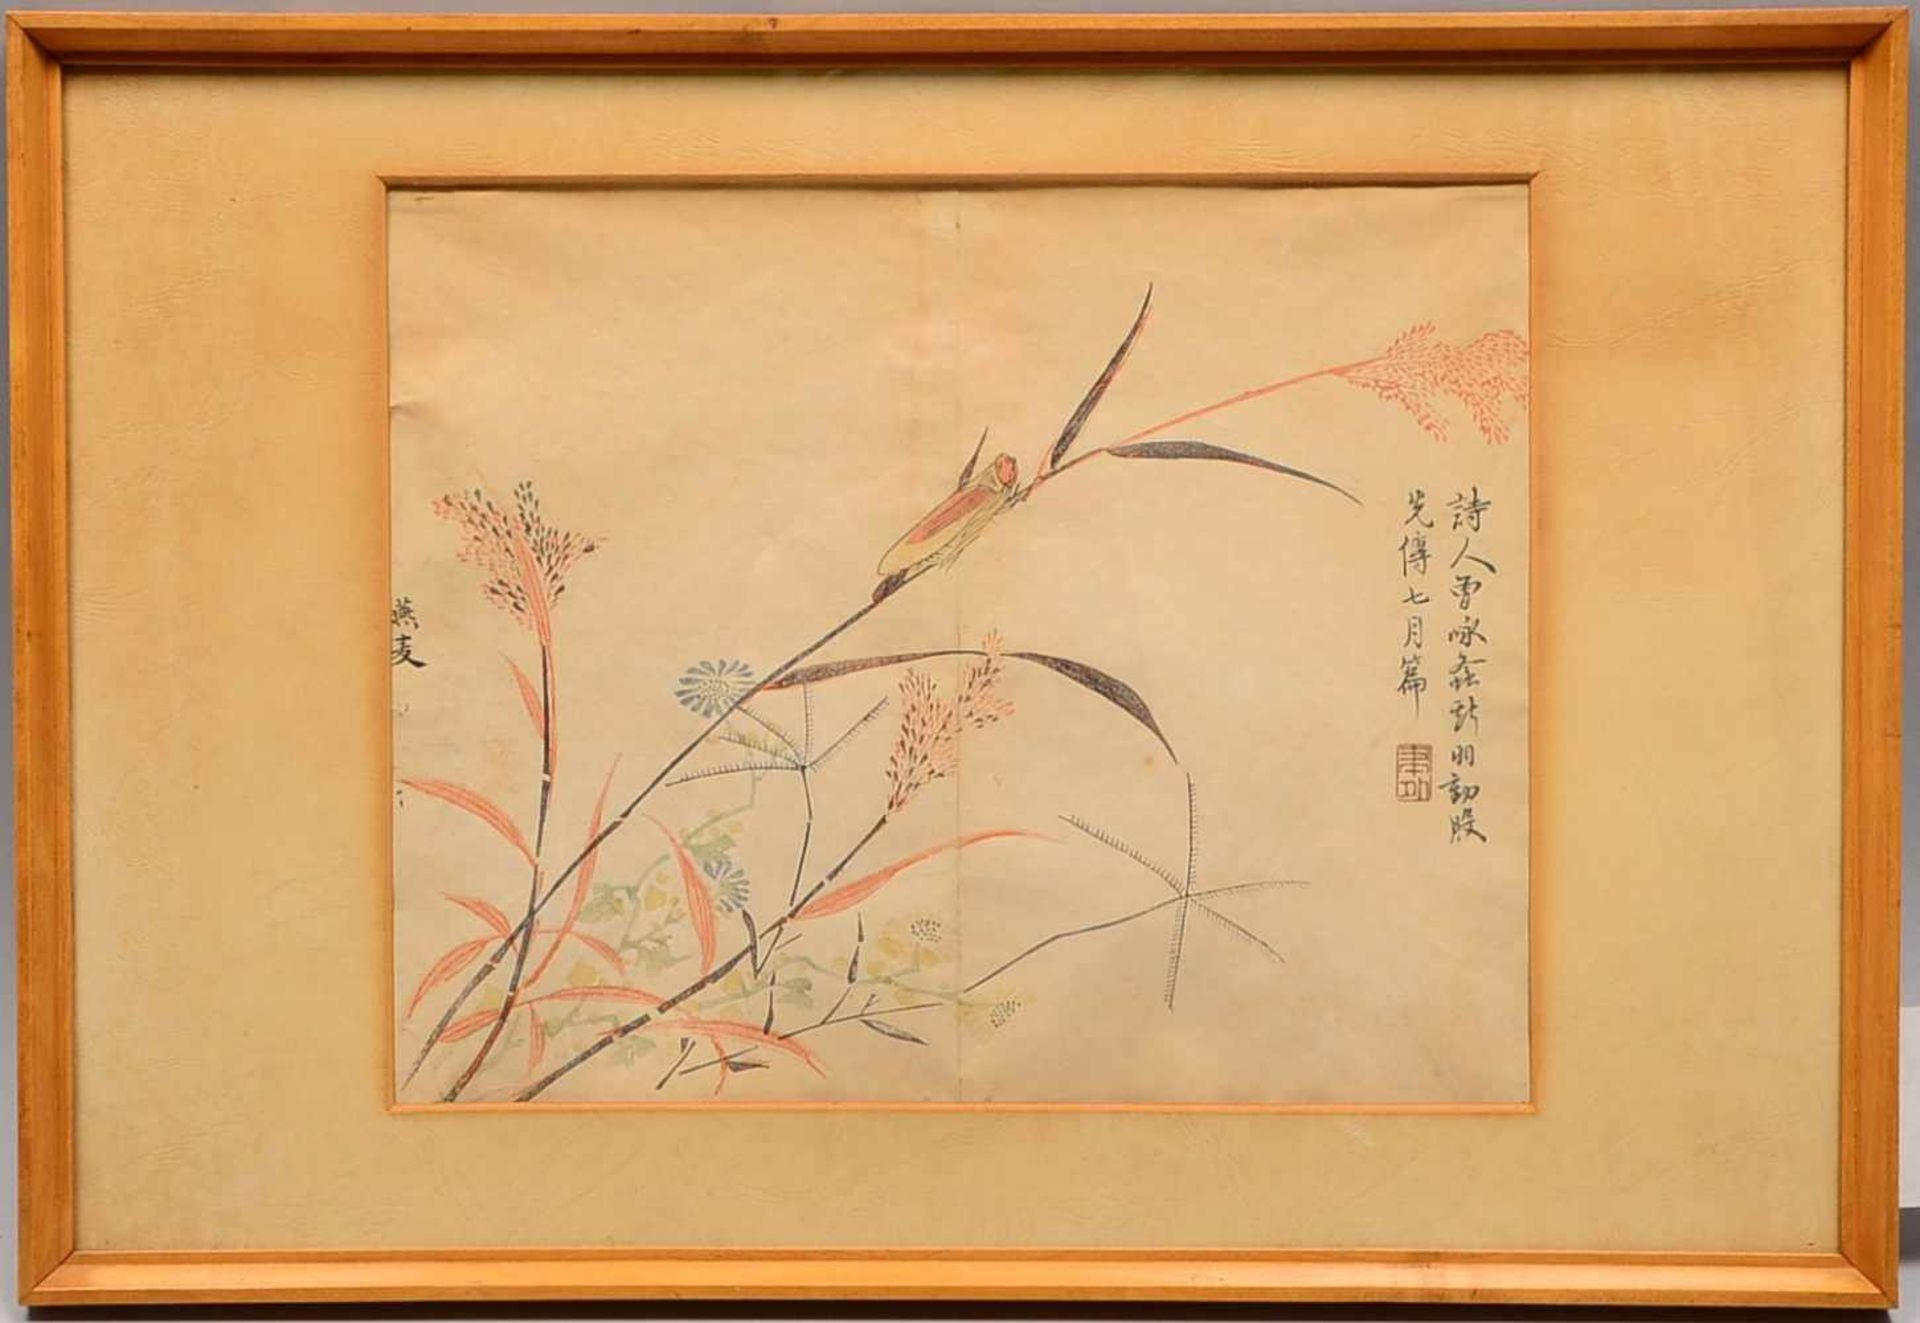 Utamaro, Kitagawa (1753 - 1806, Japan), 'Zikade auf Halm', Holzschnitt, signiert, unter Passepartout